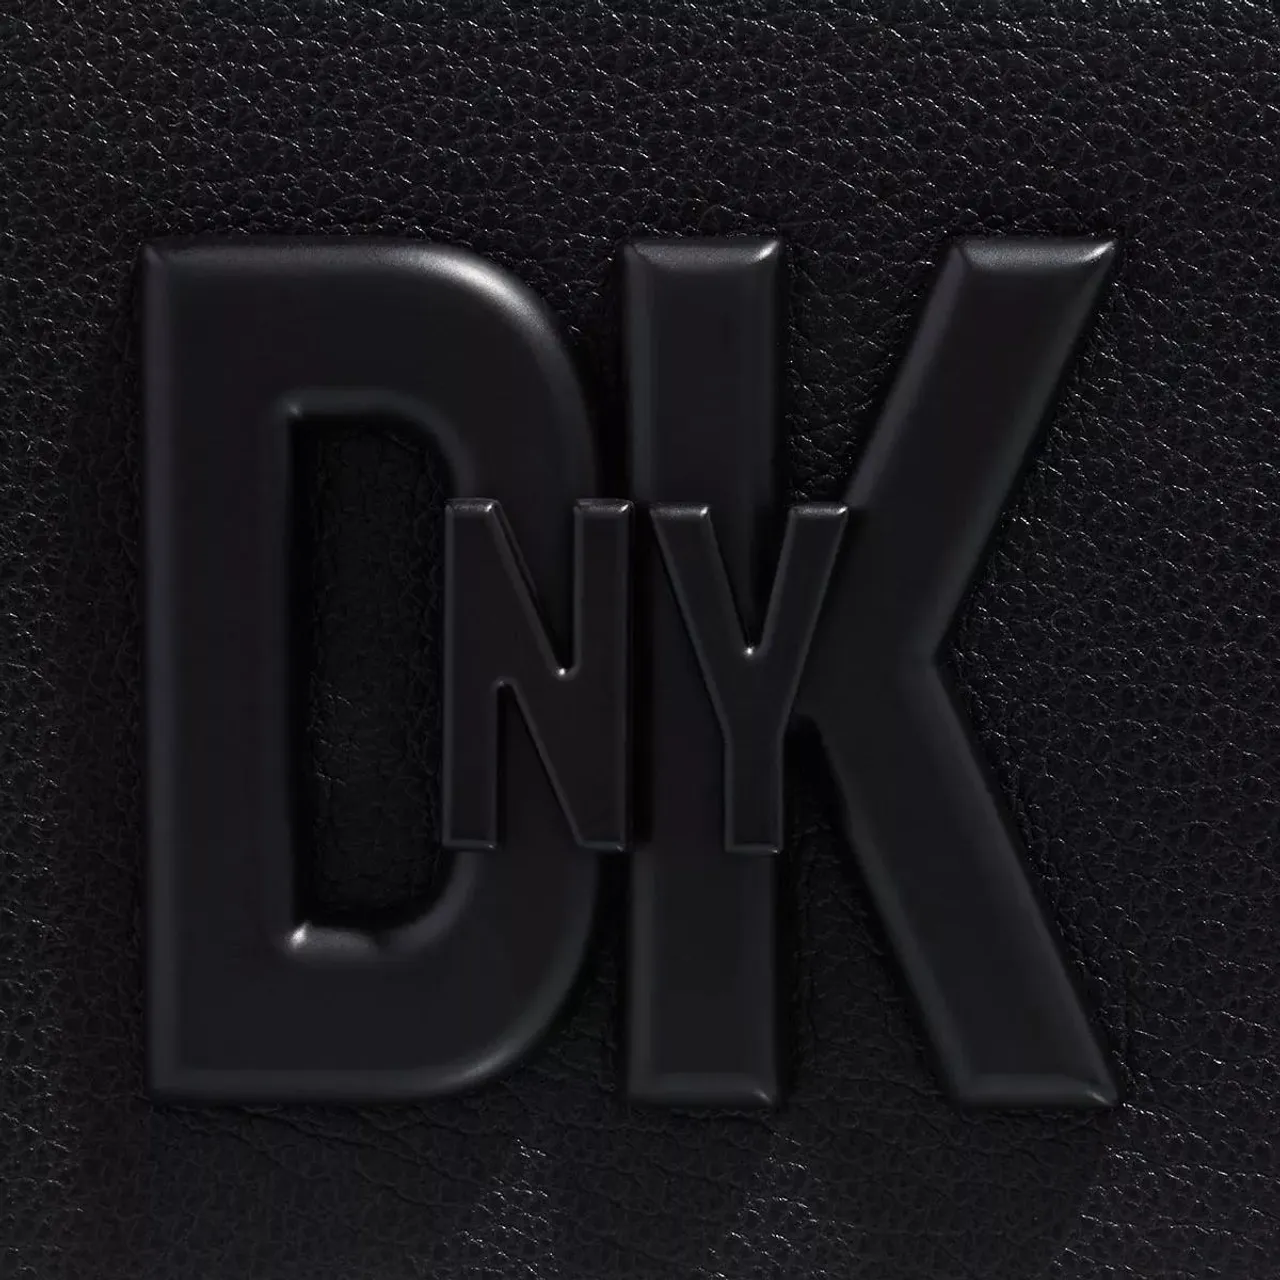 DKNY Crossbody Bags - Small Camera Bag - black - Crossbody Bags for ladies